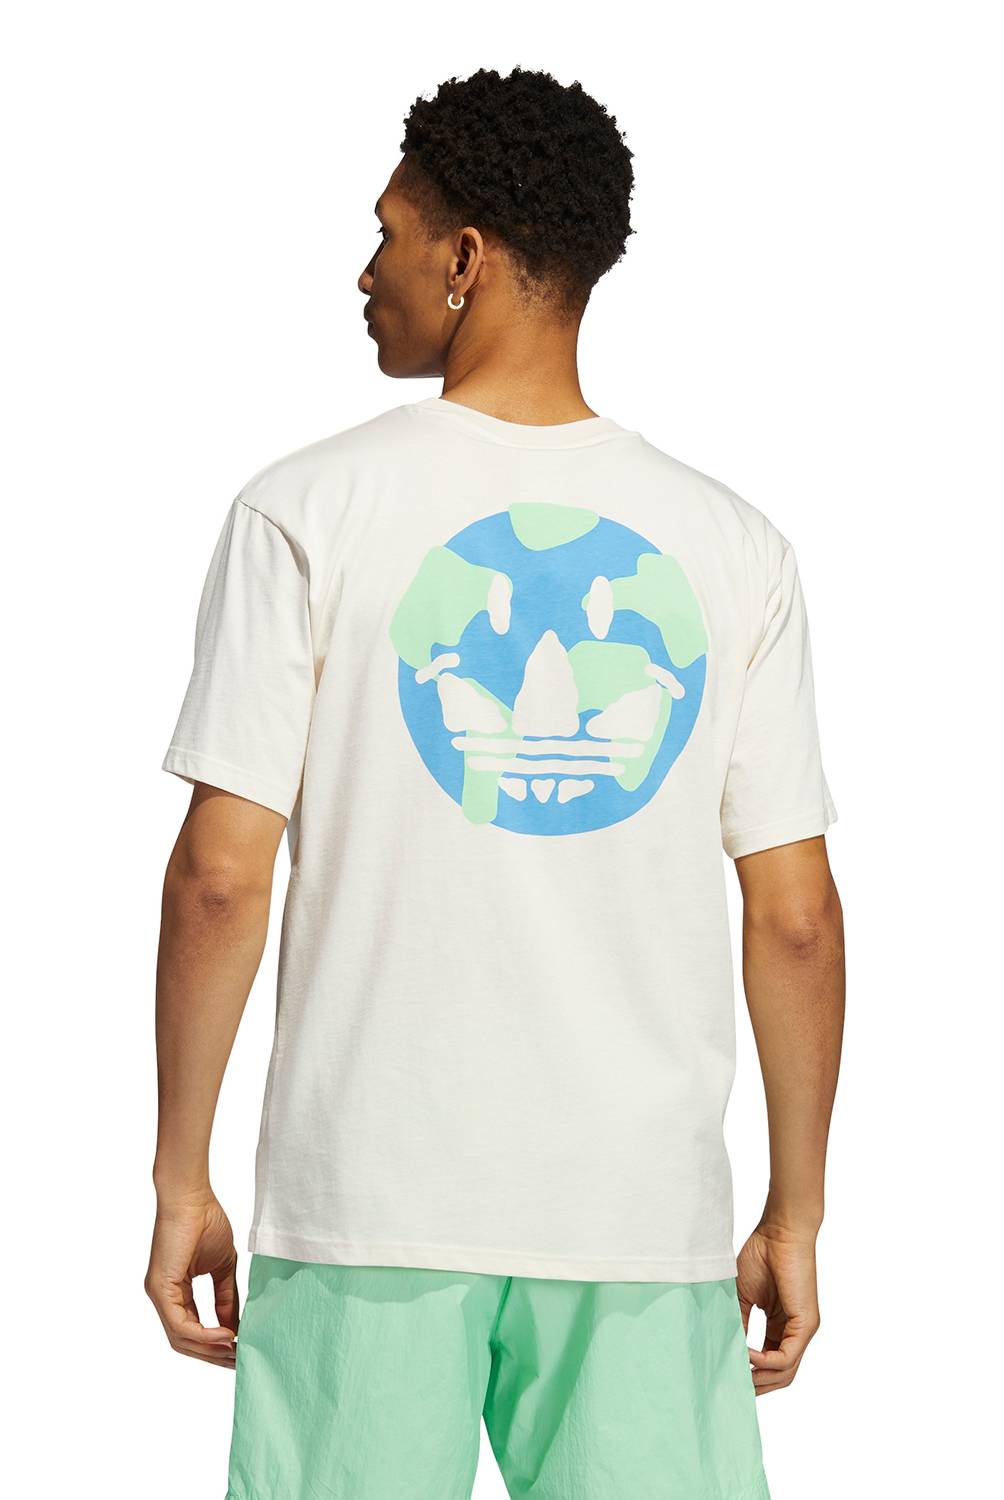 ADIDAS ORIGINALS - Camiseta deportiva Adidas Originals Hombre